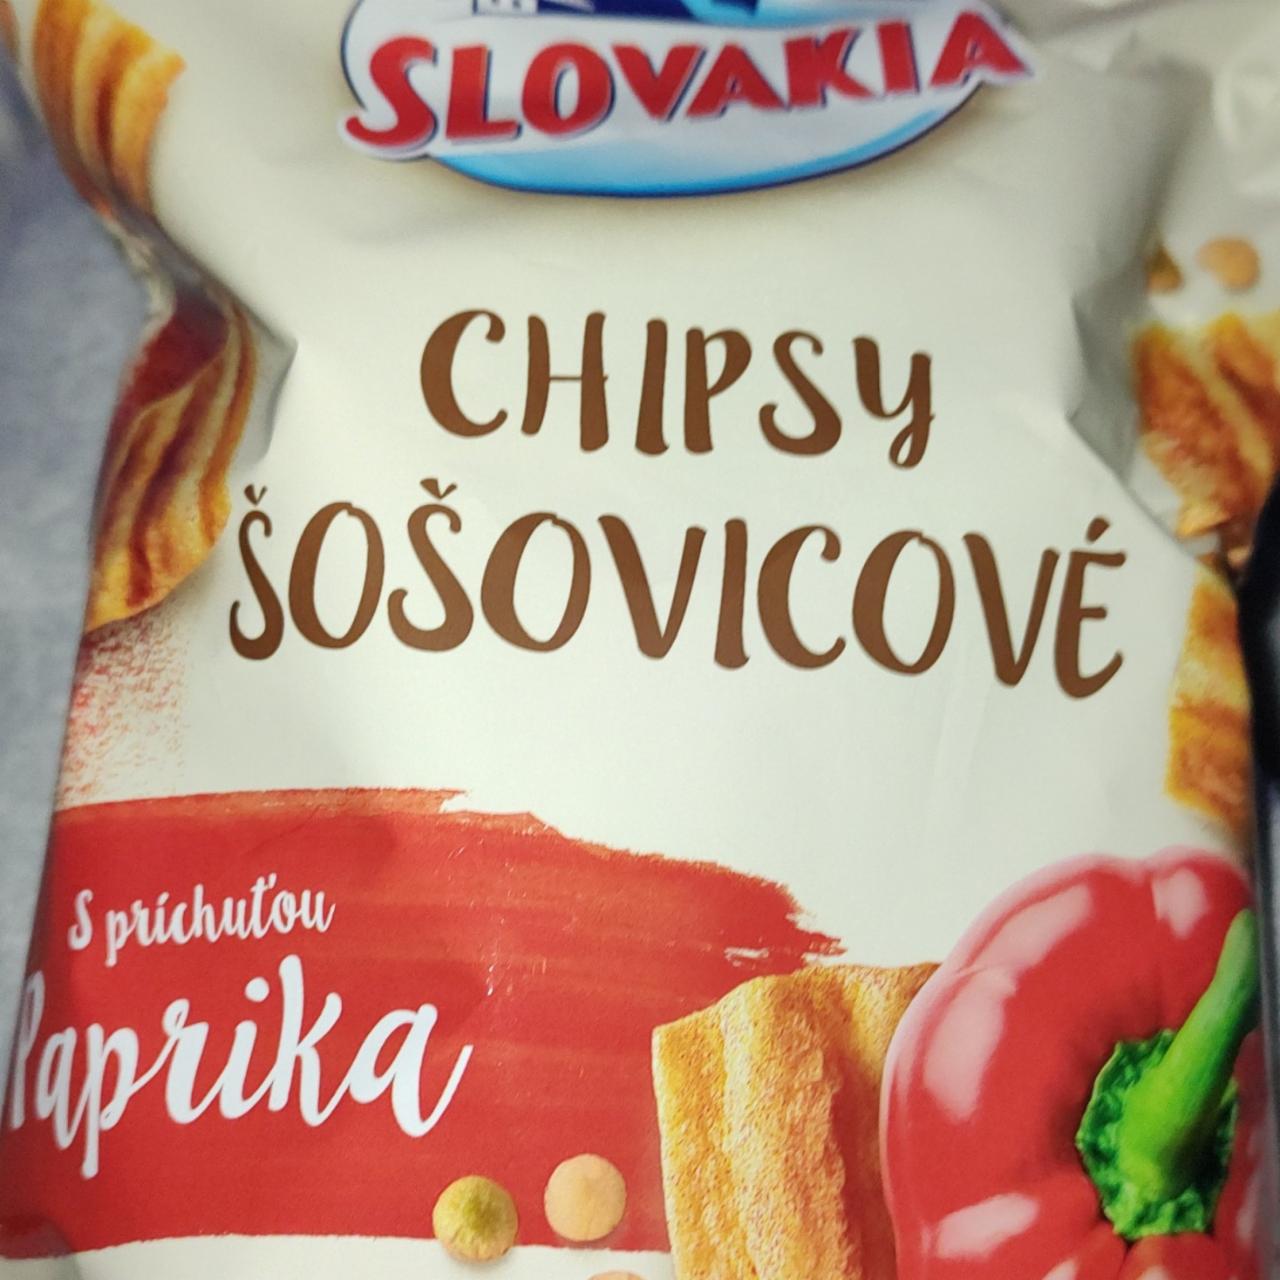 Képek - Chipsy šošovicové s príchuťou paprika Slovakia